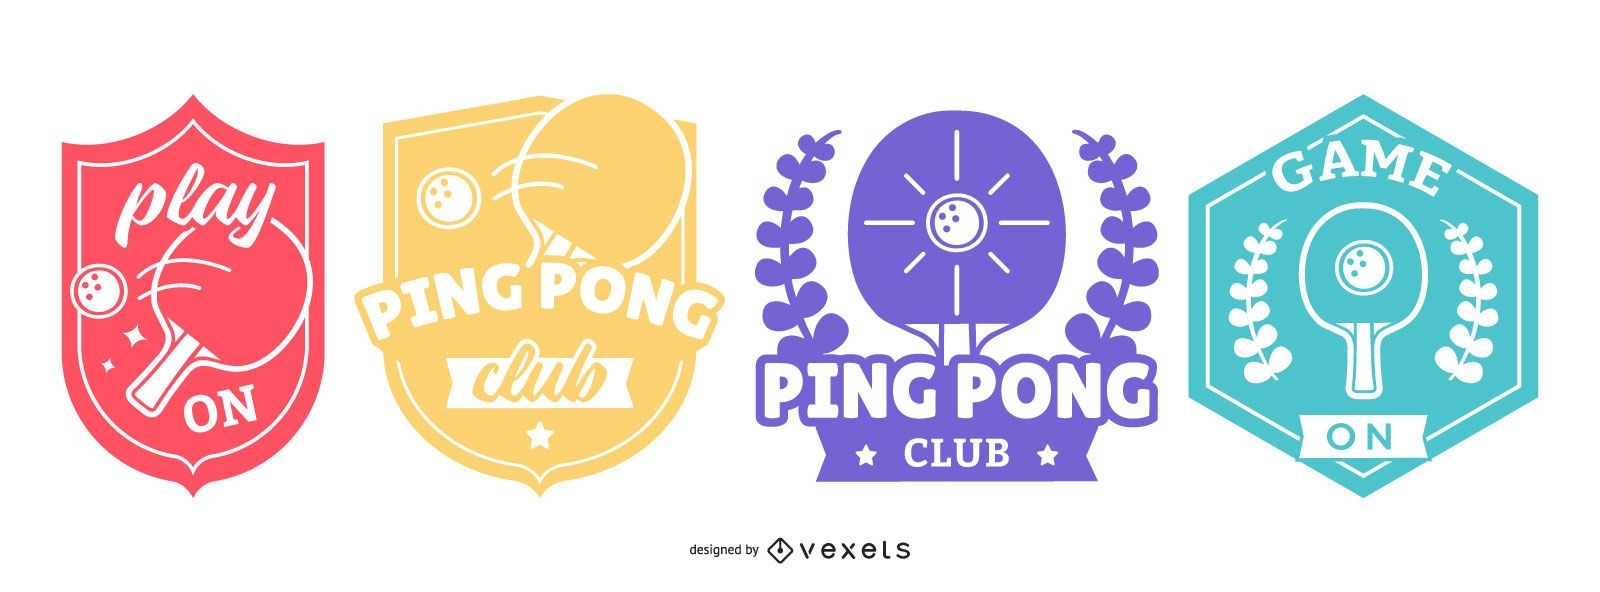 Conjunto de insignias de ping pong